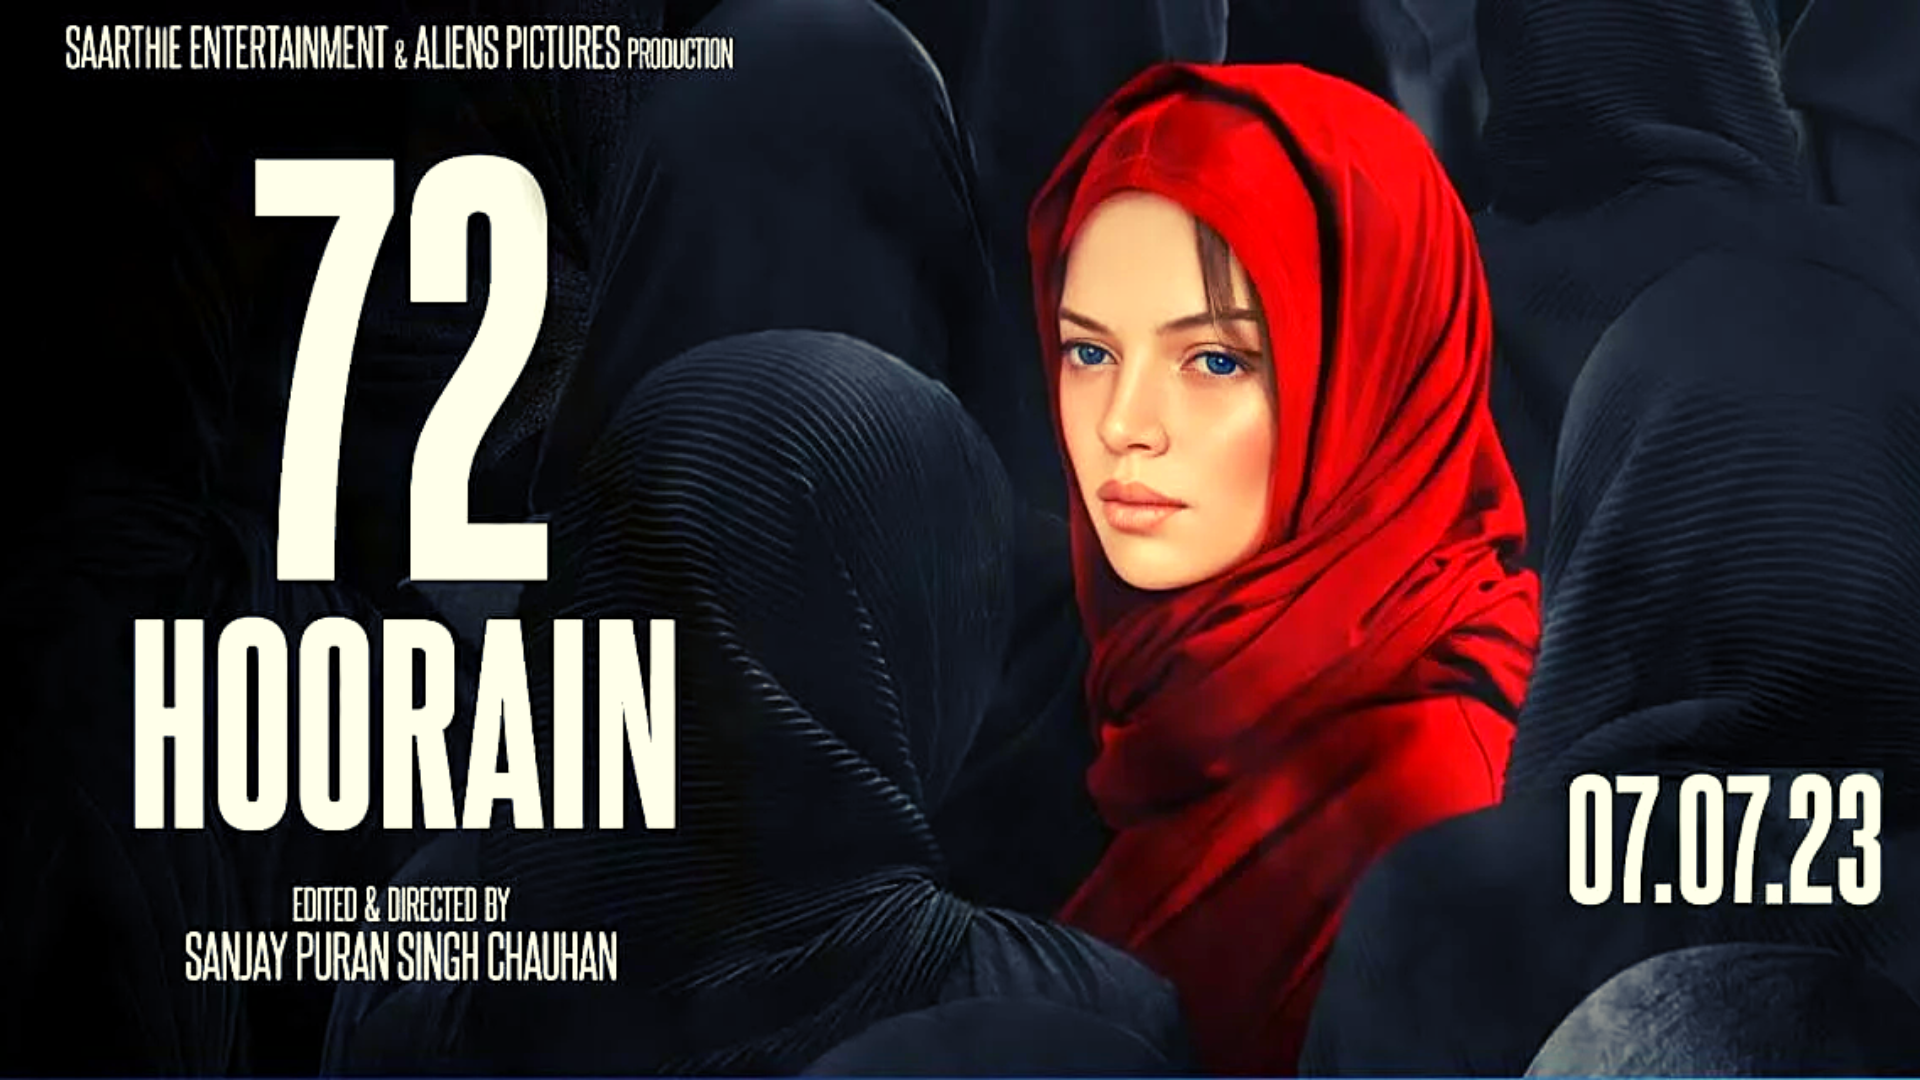 72 Hoorain Movie Ticket Offers: Release Date, Cast, Trailer & More